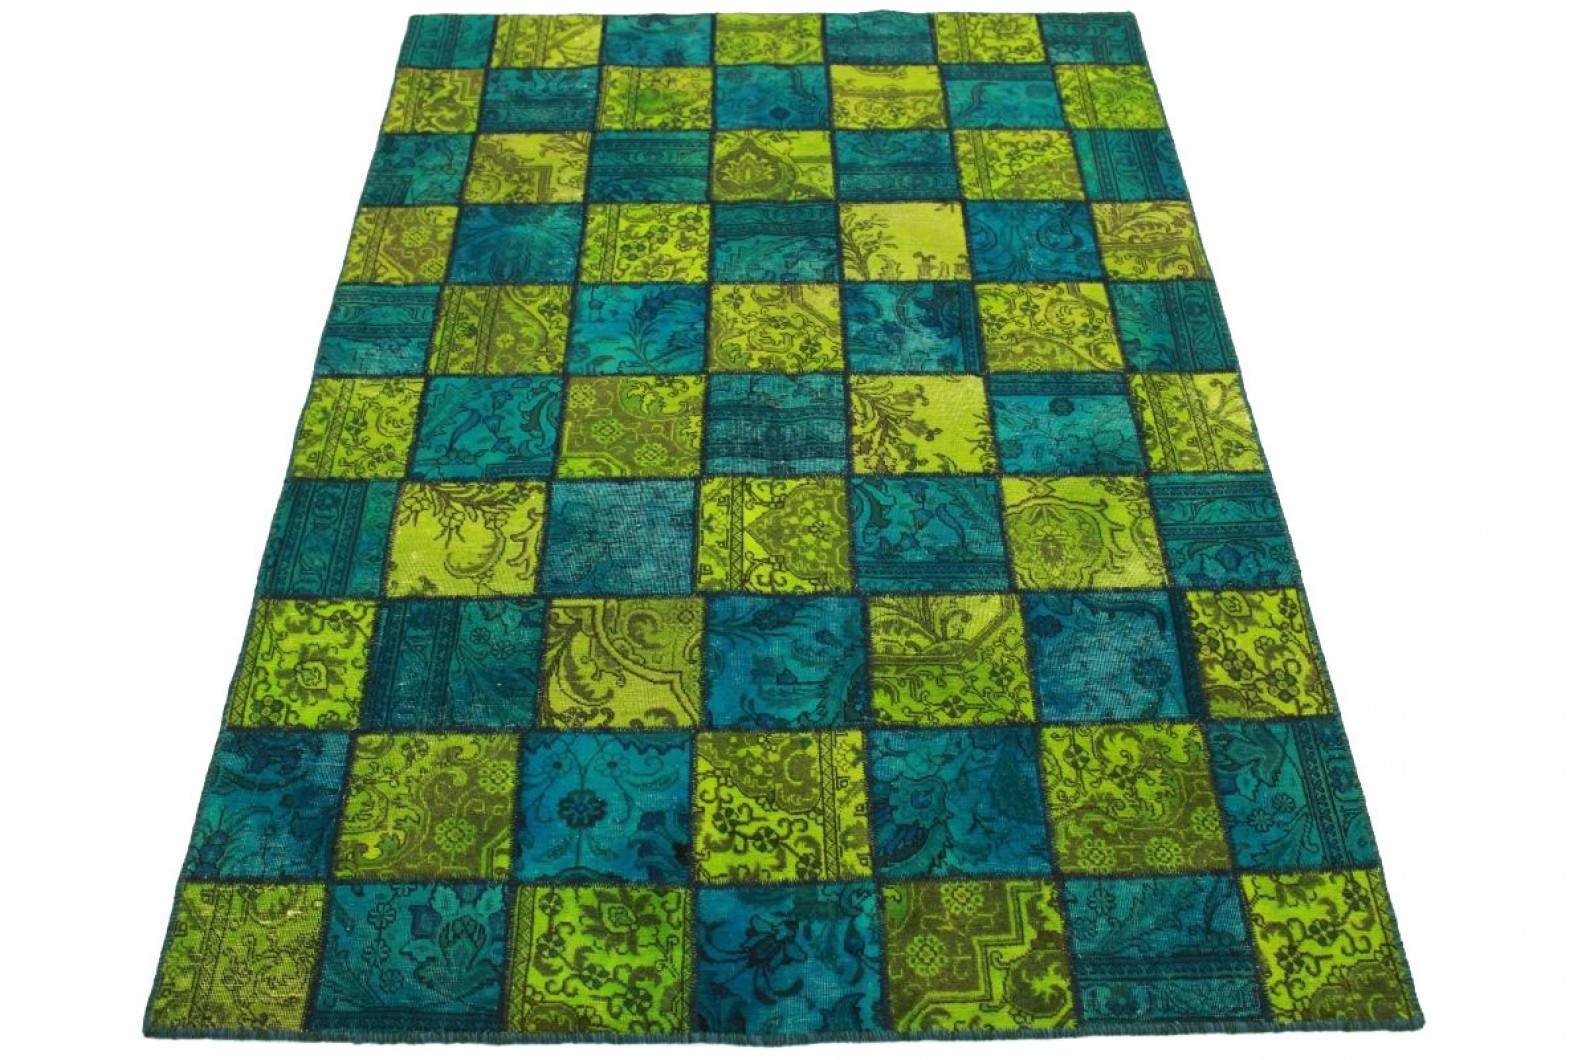 Teppich Grün Blau
 Patchwork Teppich Grün Blau in 250x170cm 1001 2001 bei